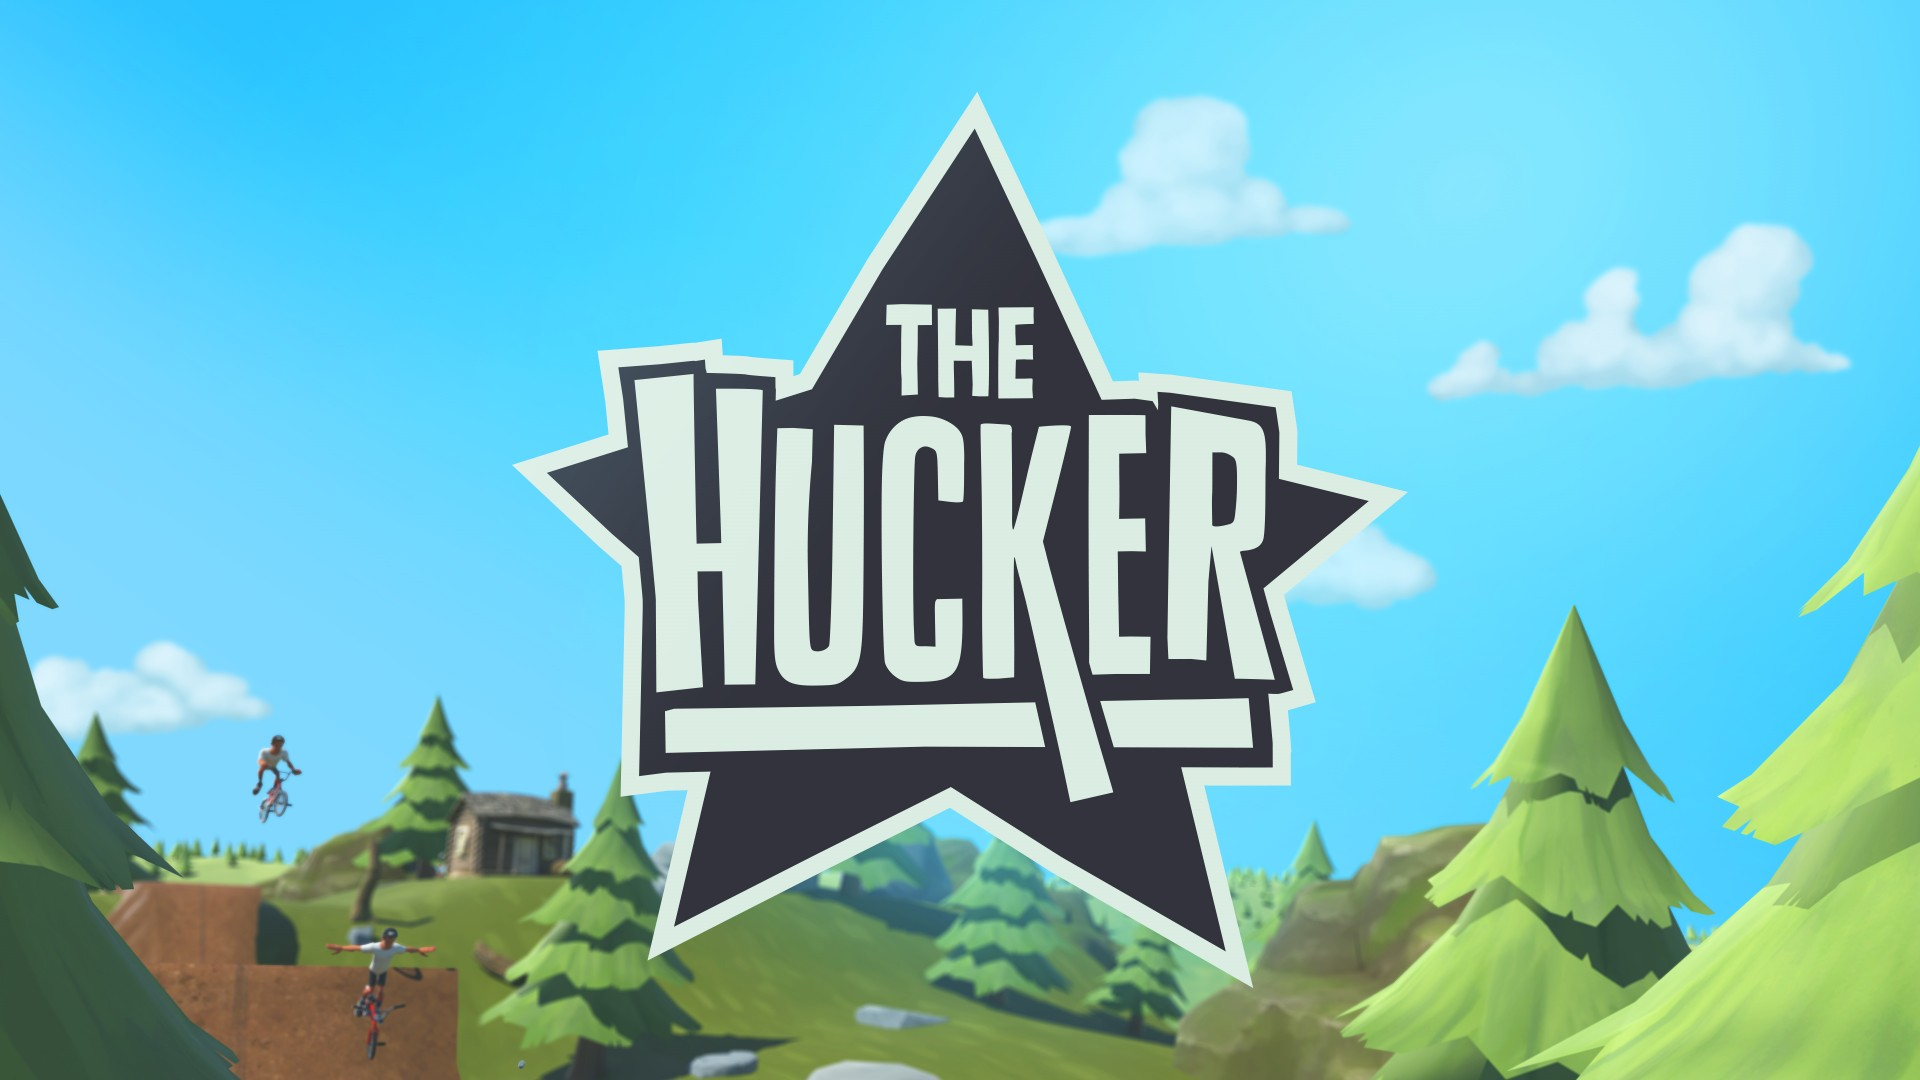 The Hucker